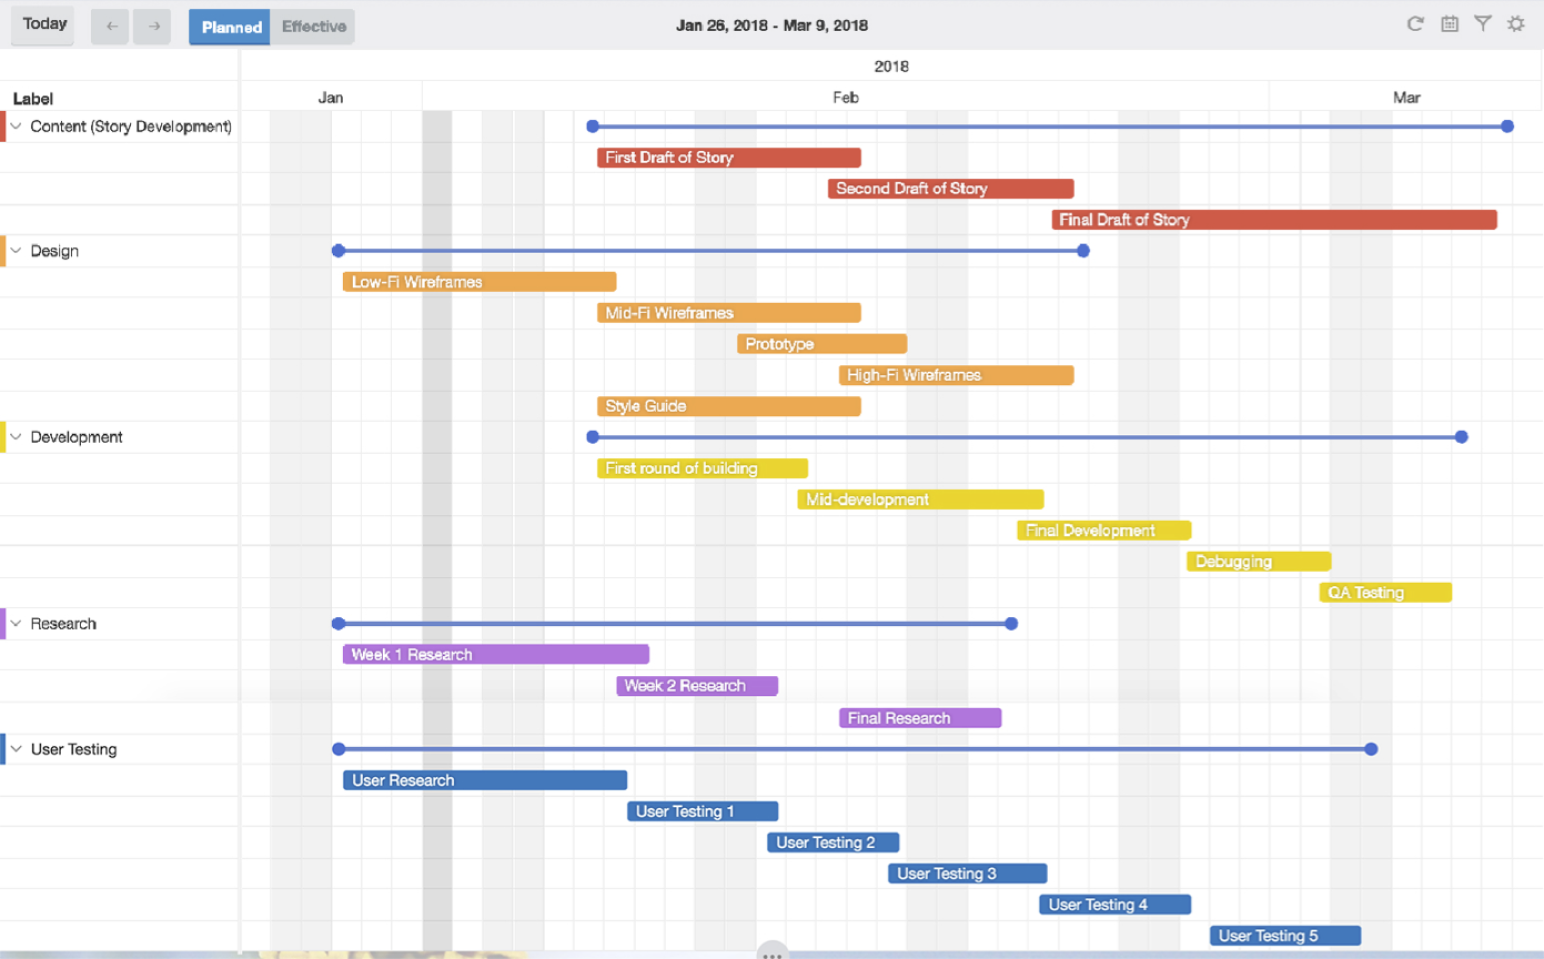 Project Management timeline